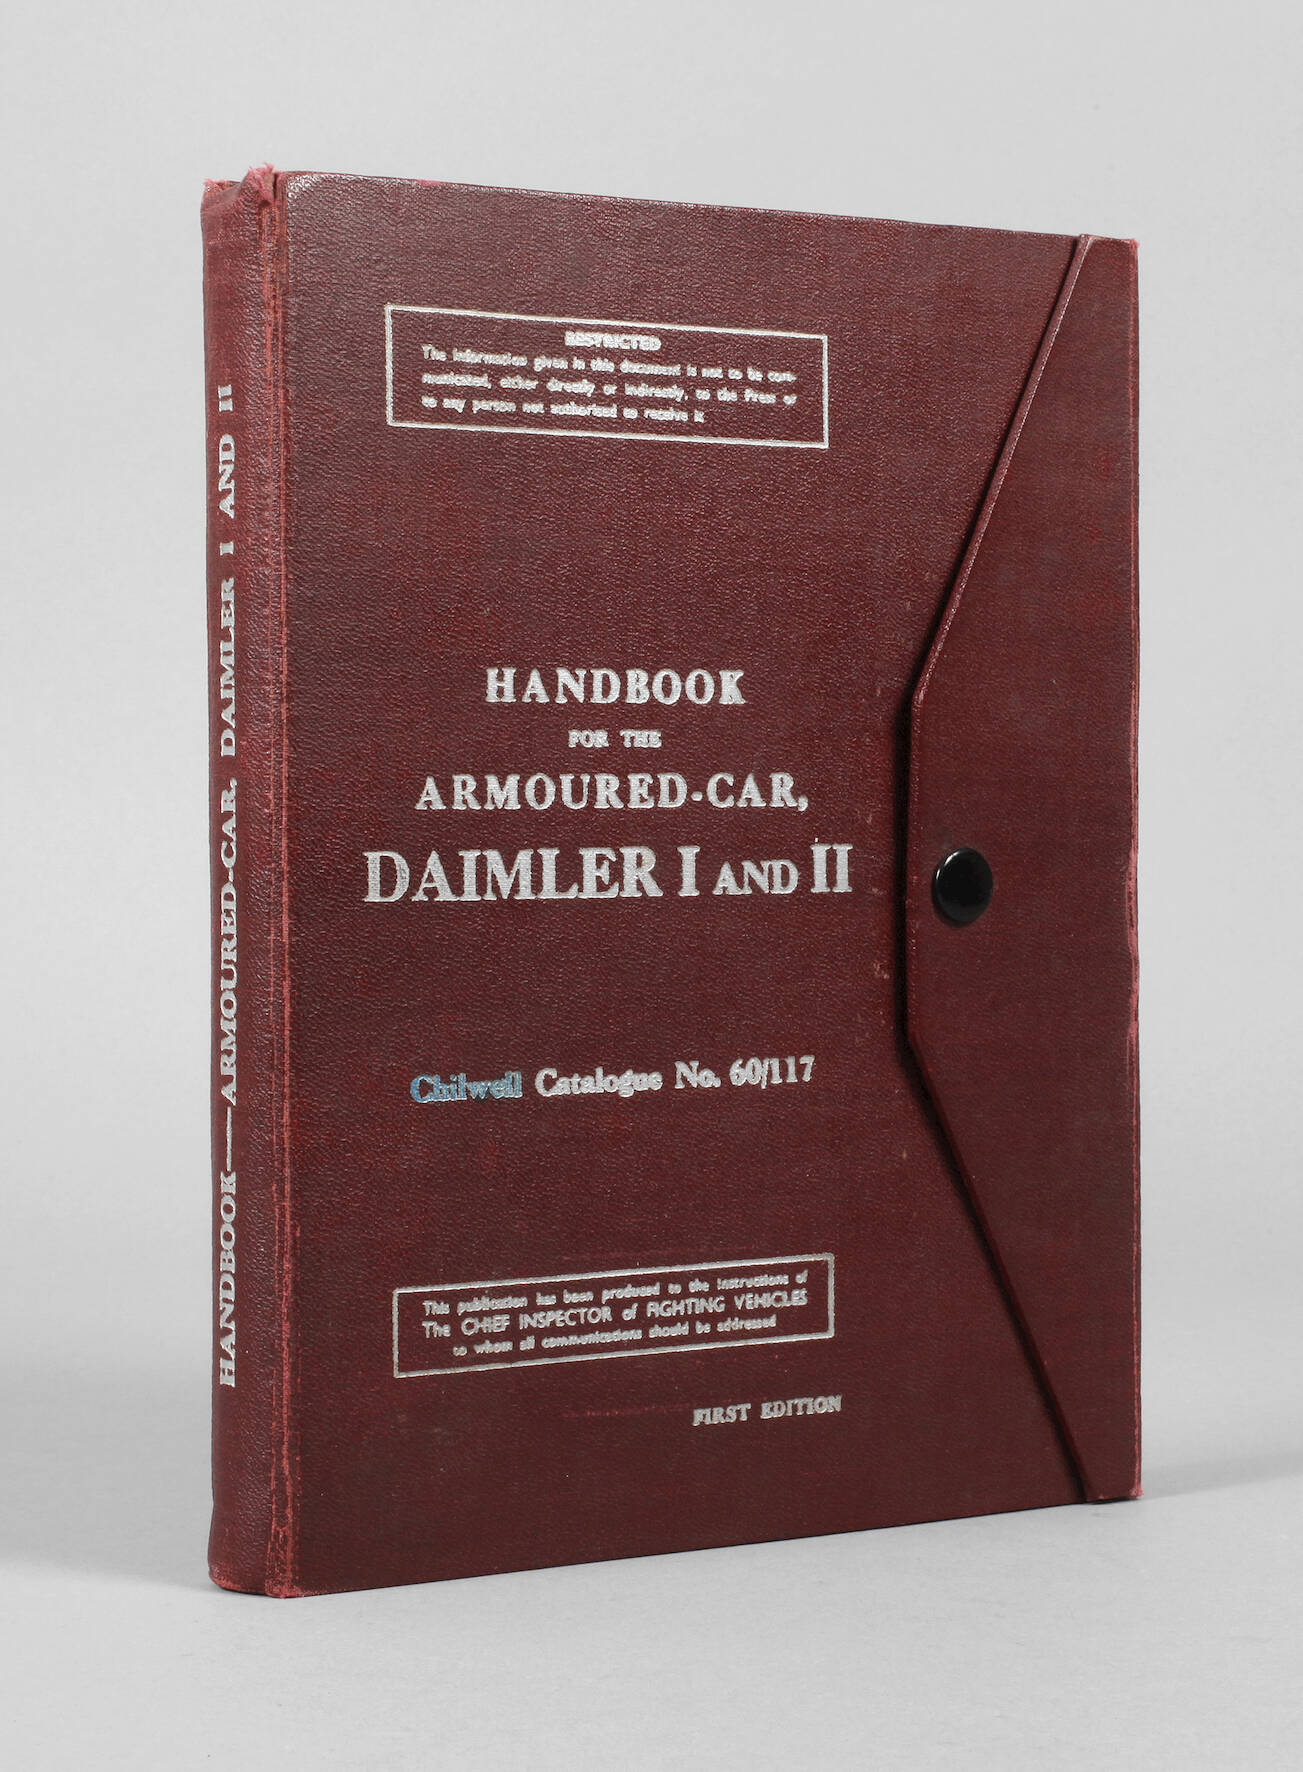 Handbook for the Armored-Car, DAIMLER I and II